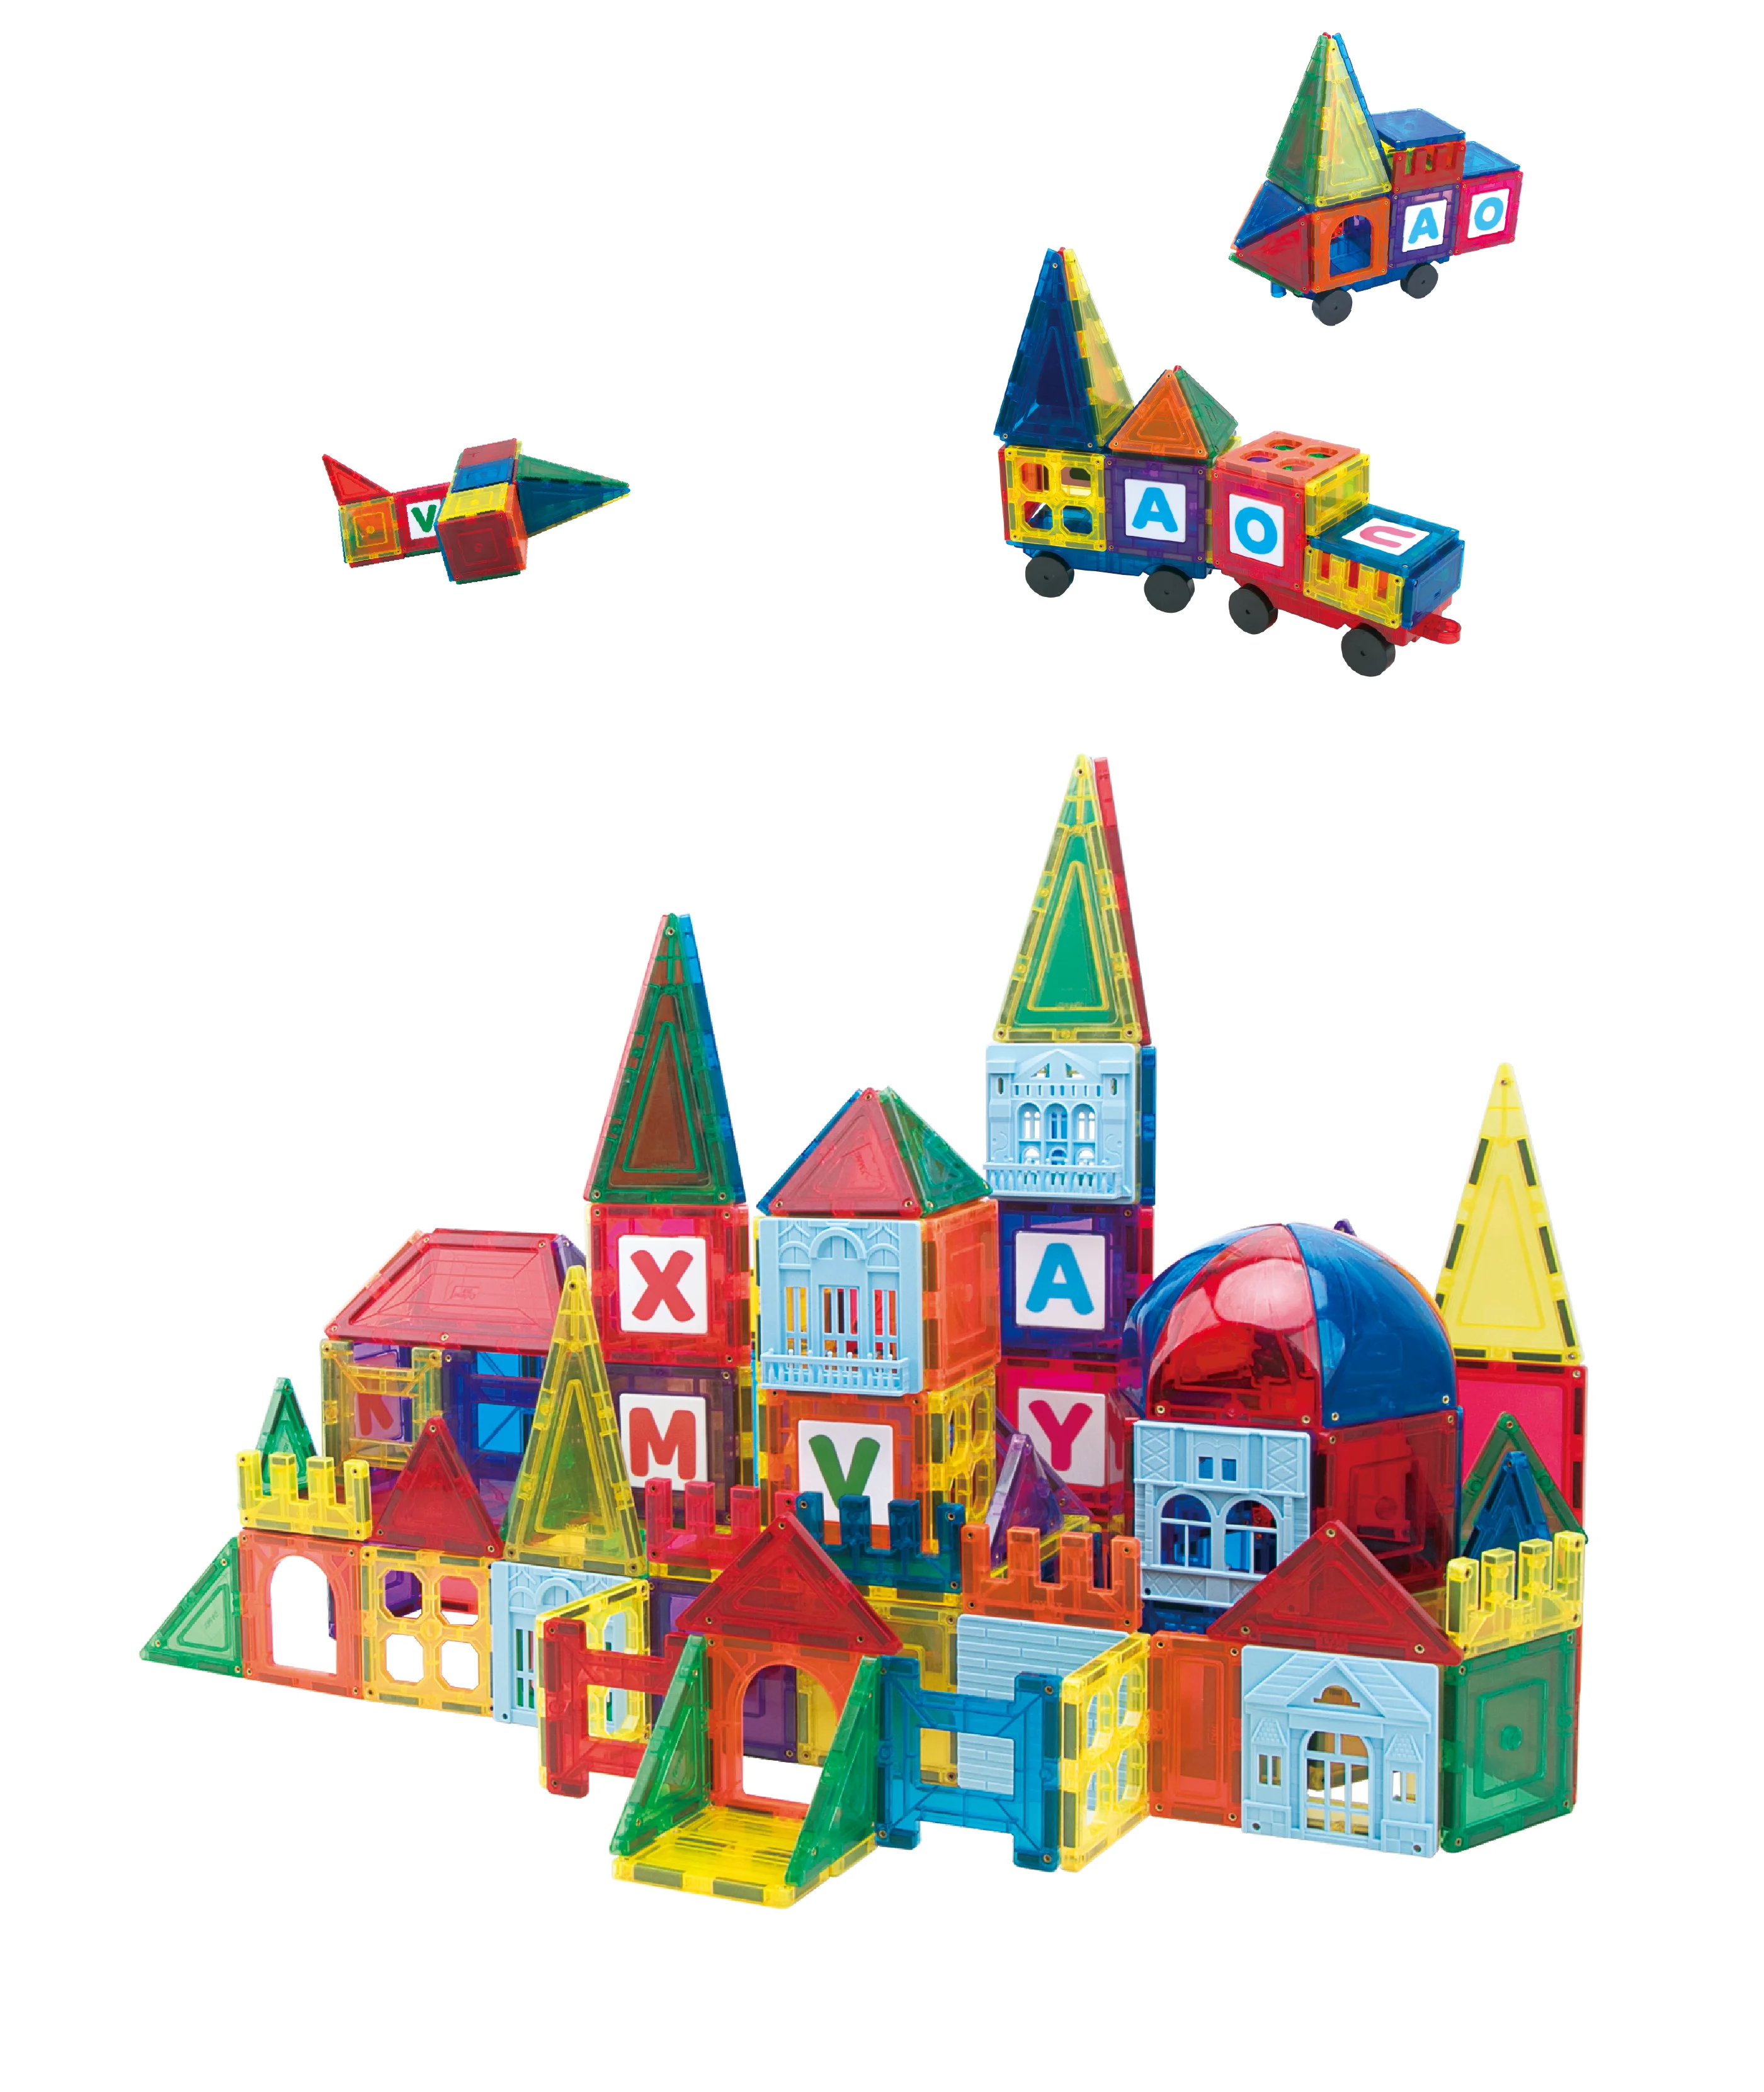 
Educational diy 3d clear magnetic blocks tiles magnet toy set plastic magnetic building toys for kids  (1600264735634)